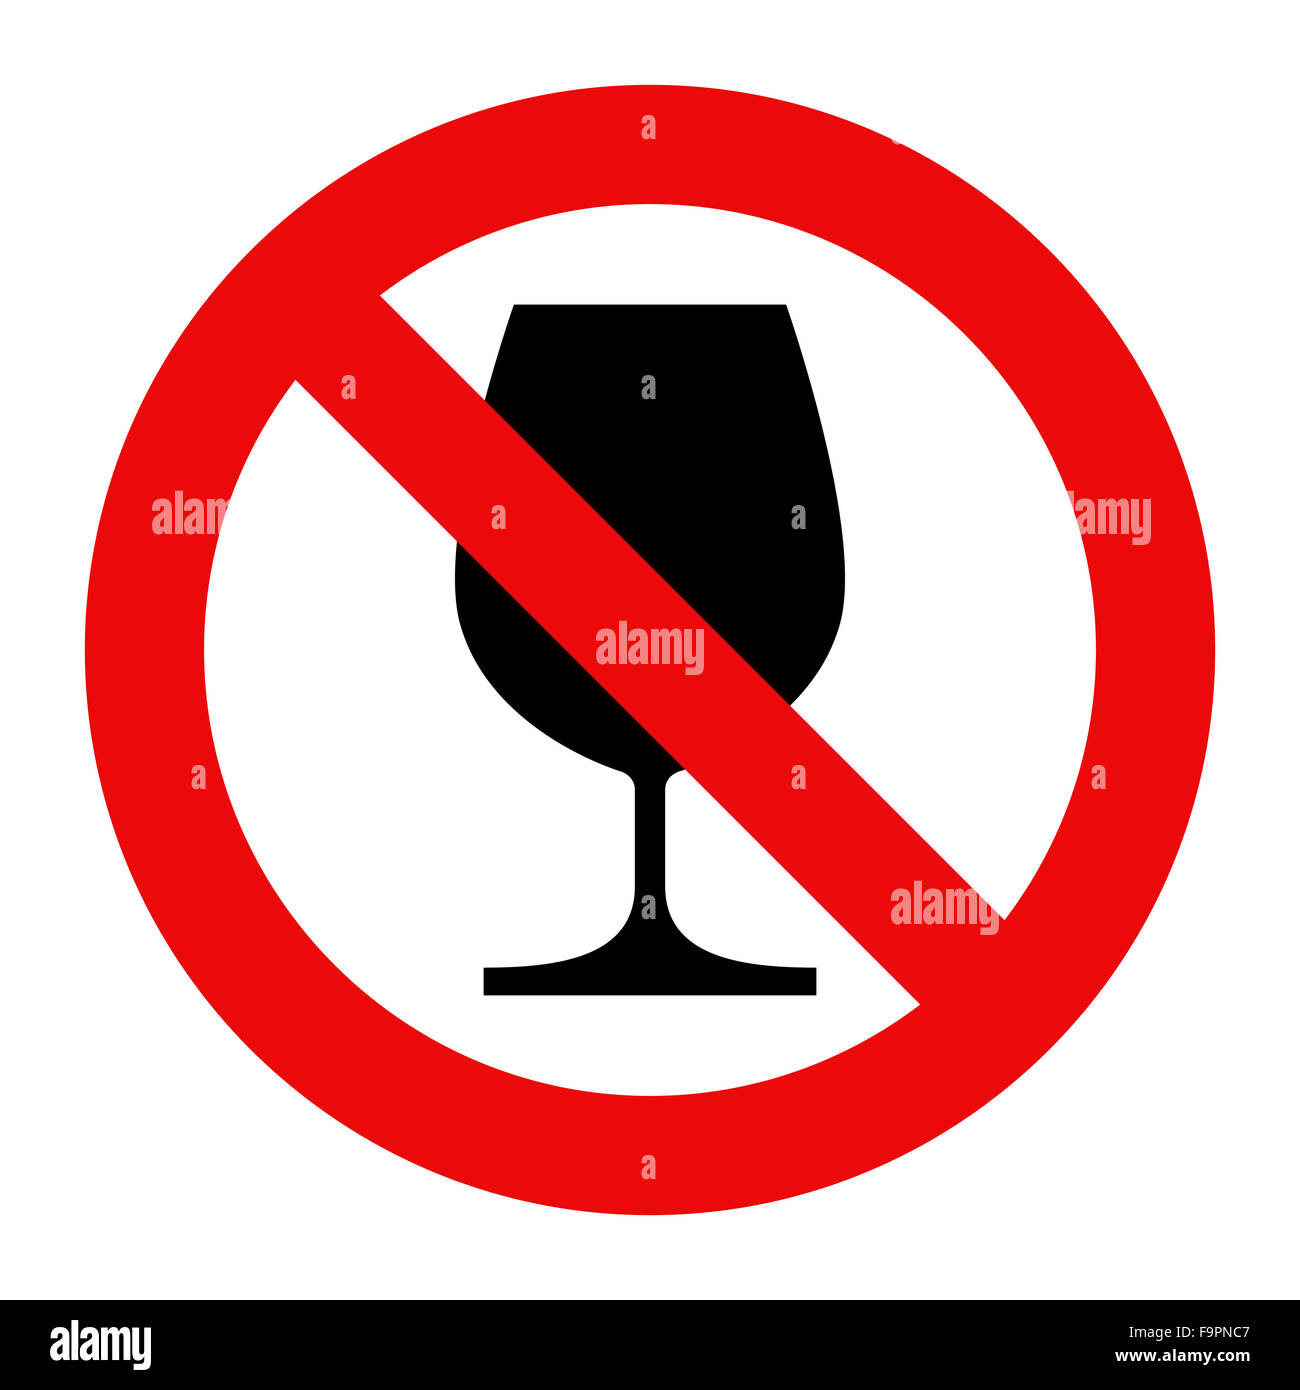 No alcohol sign. Warning sign isolated on white background Stock Photo